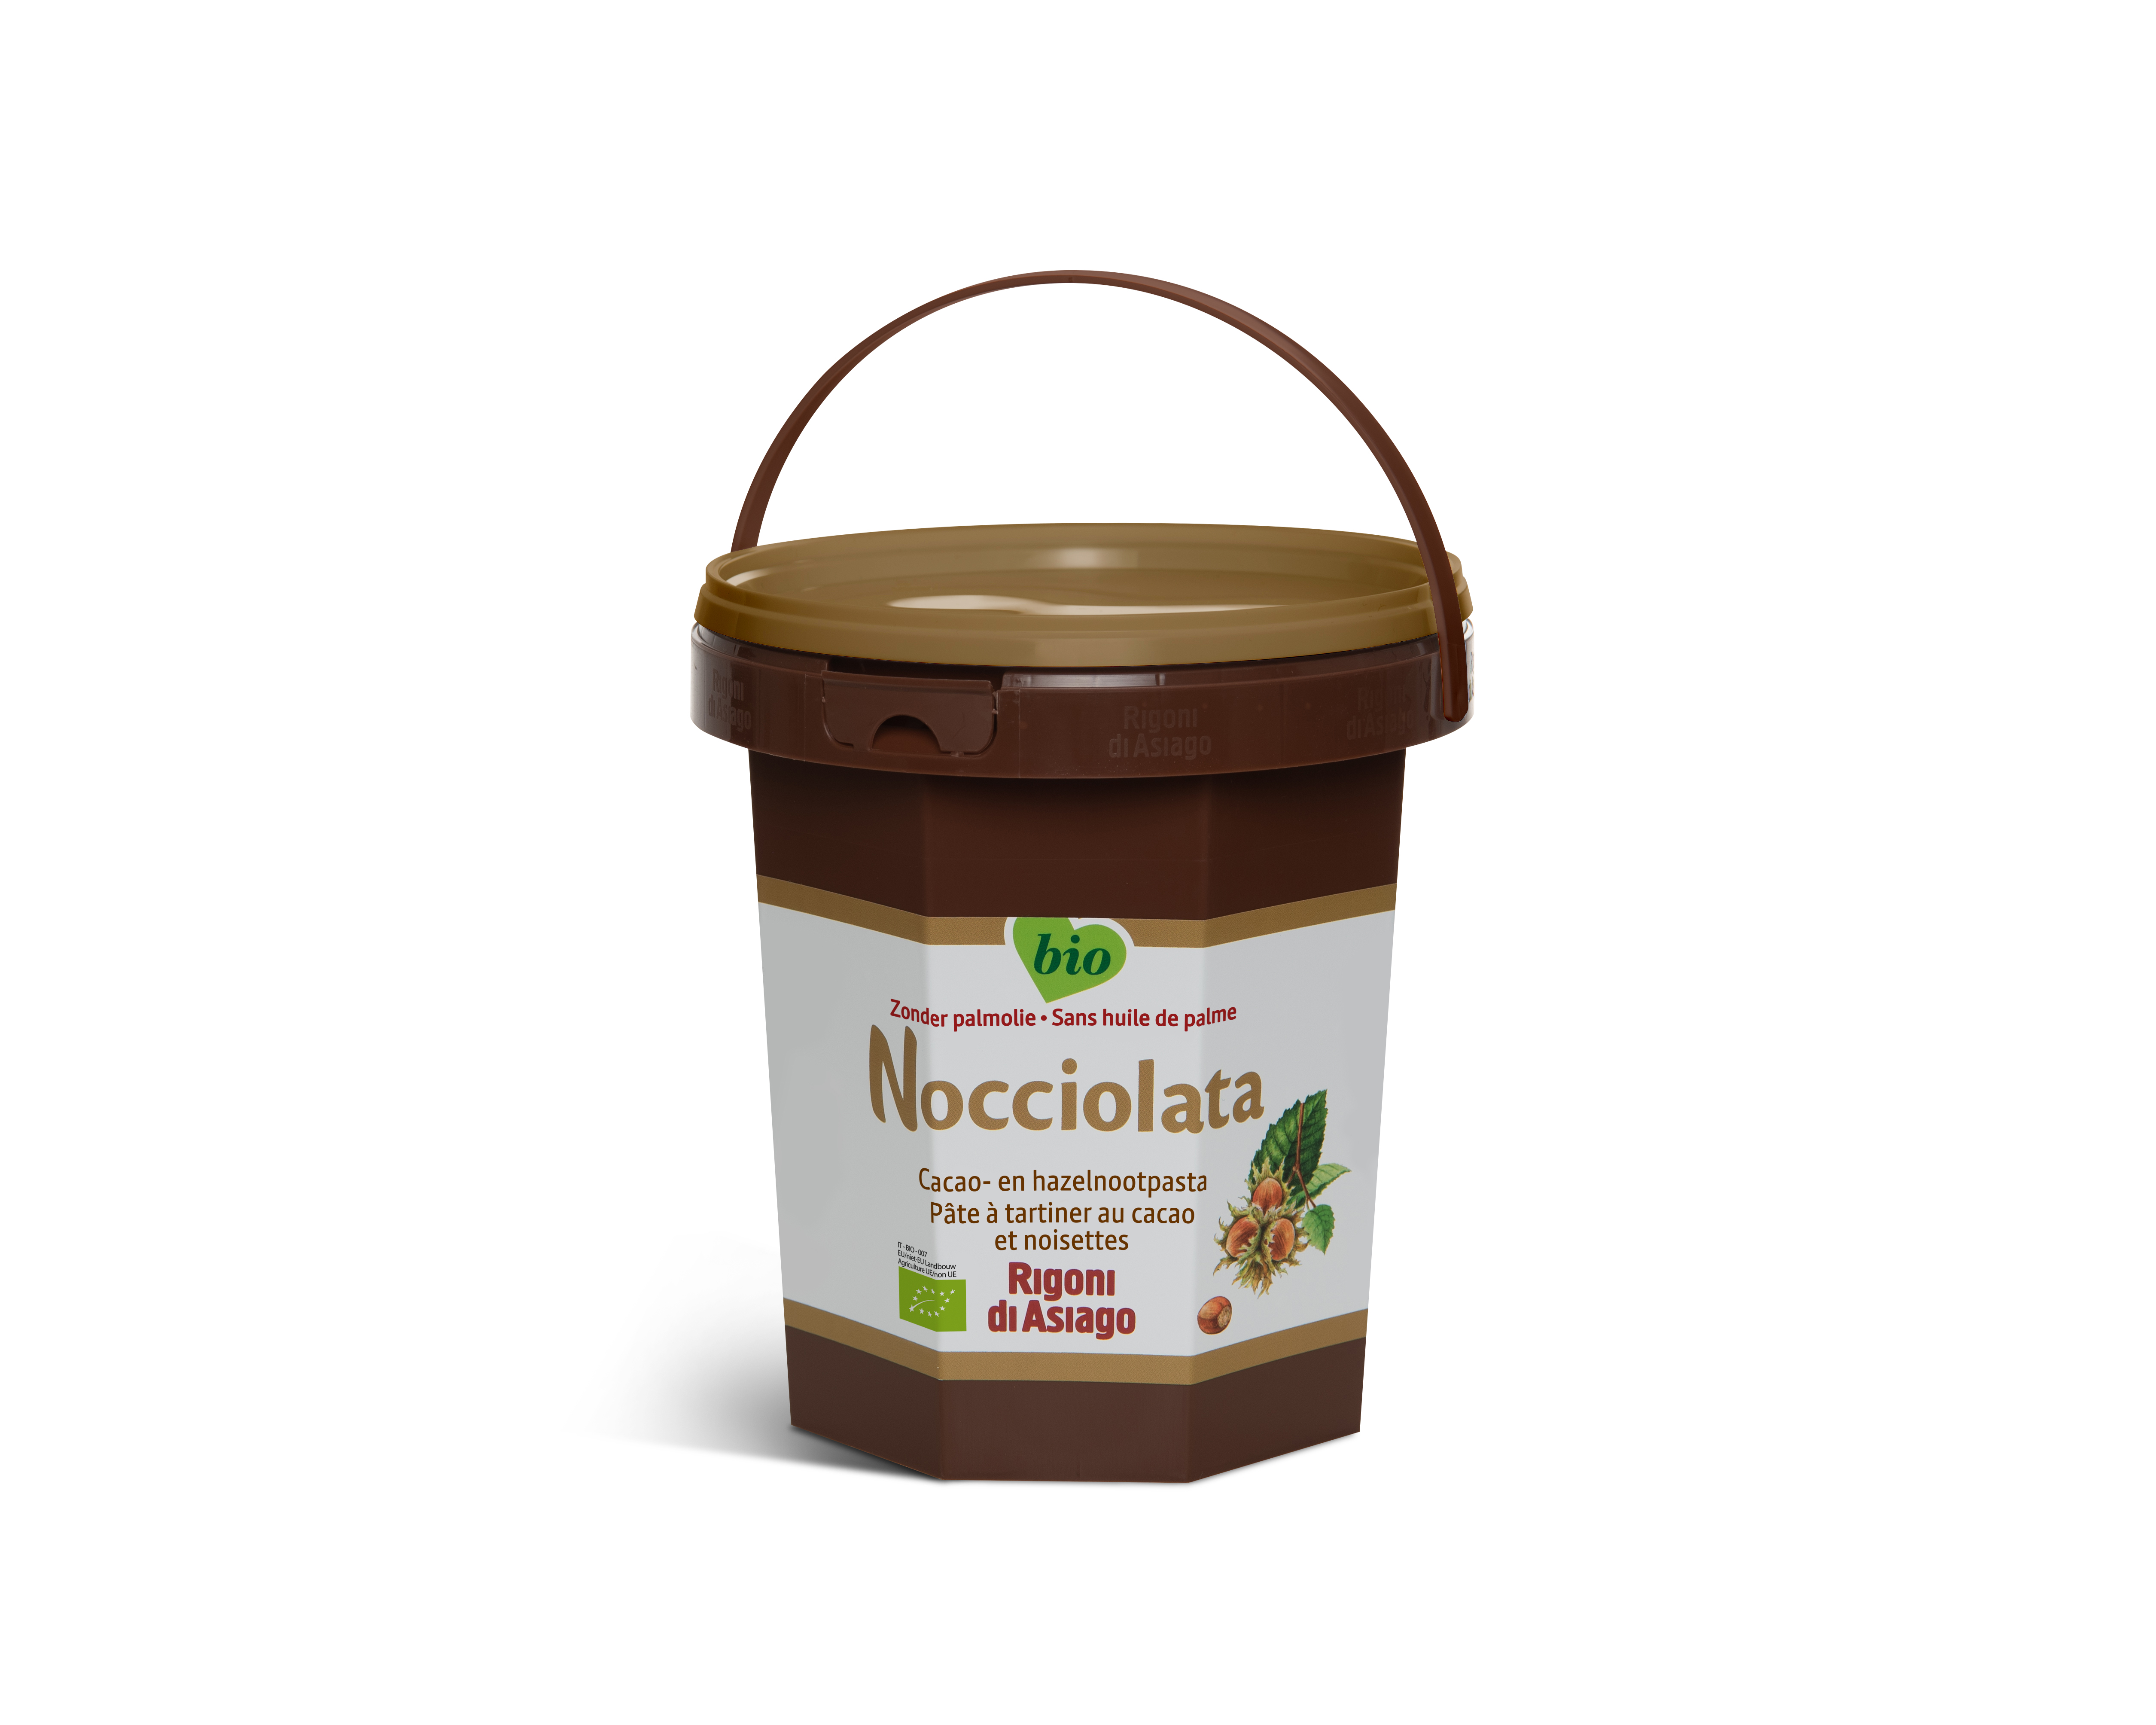 Nocciolata Pâte à tartiner au cacao et noisettes bio 2.5kg - 9605